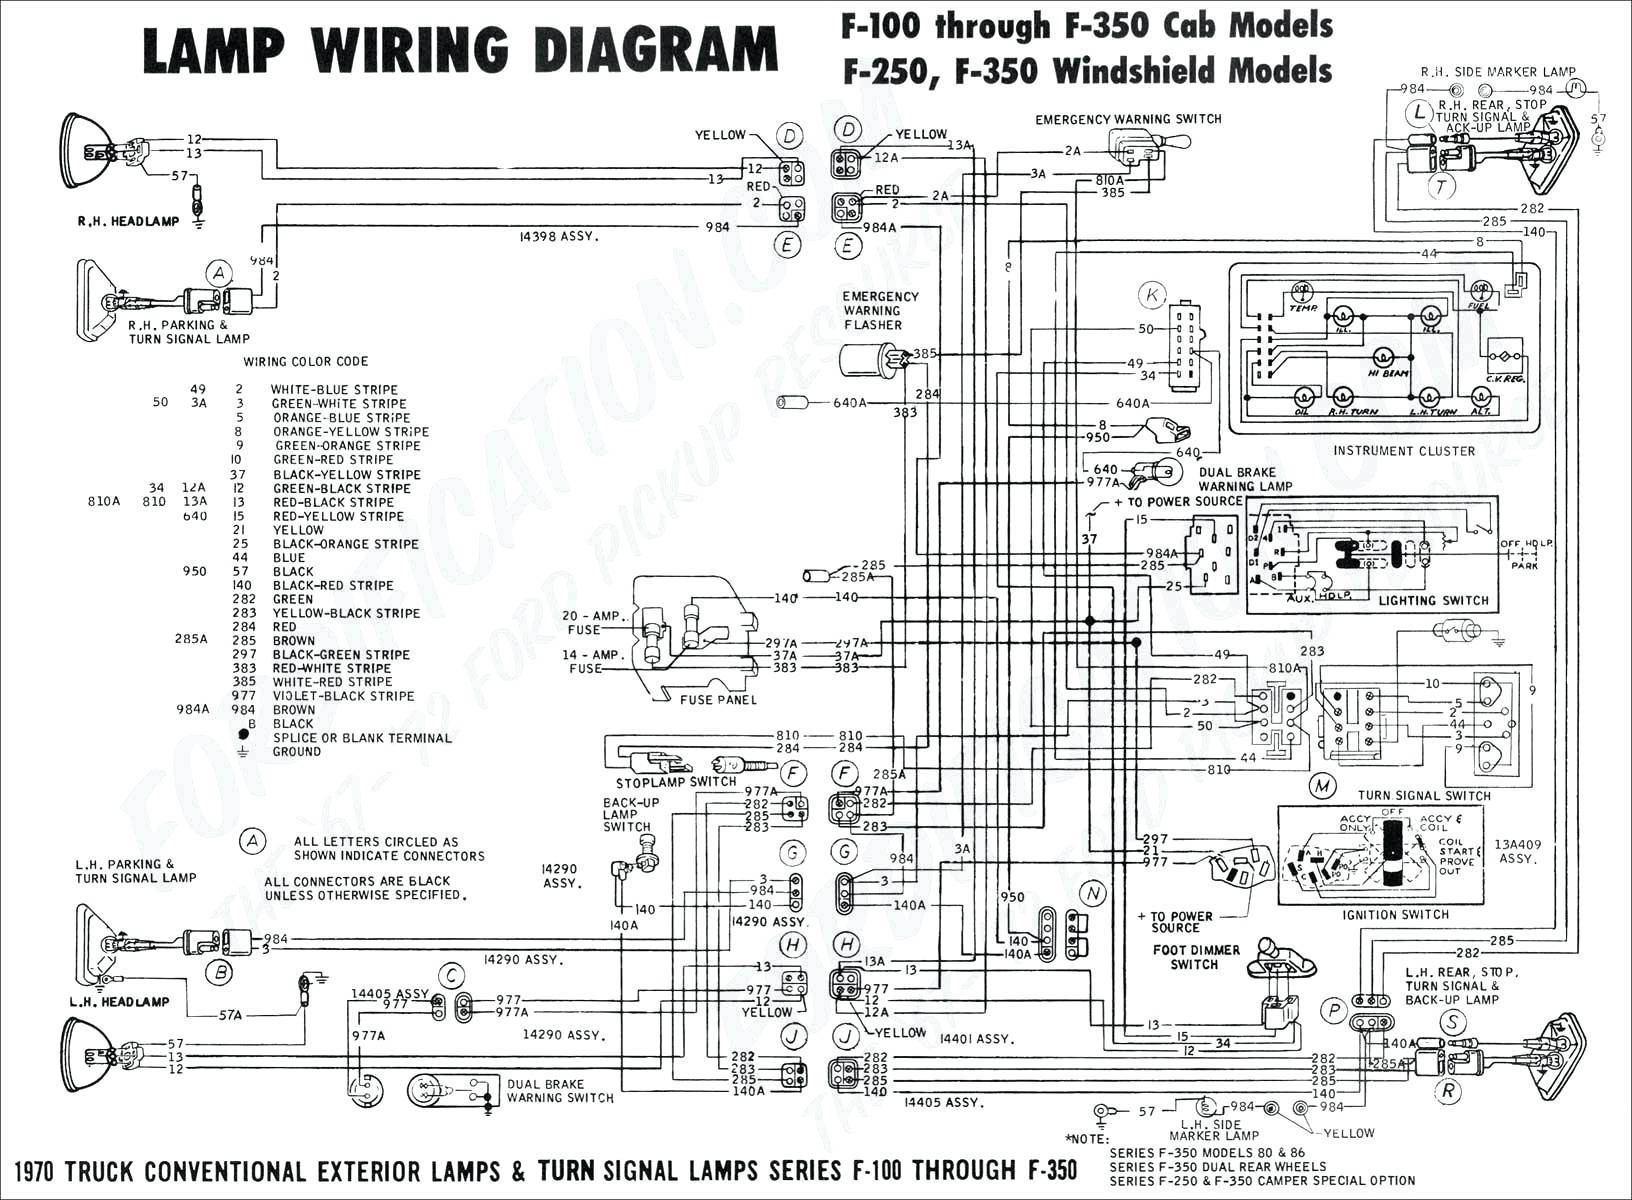 1999 Buick Regal Engine Diagram 135 Hp Evinrude Wiring Diagram Of 1999 Buick Regal Engine Diagram